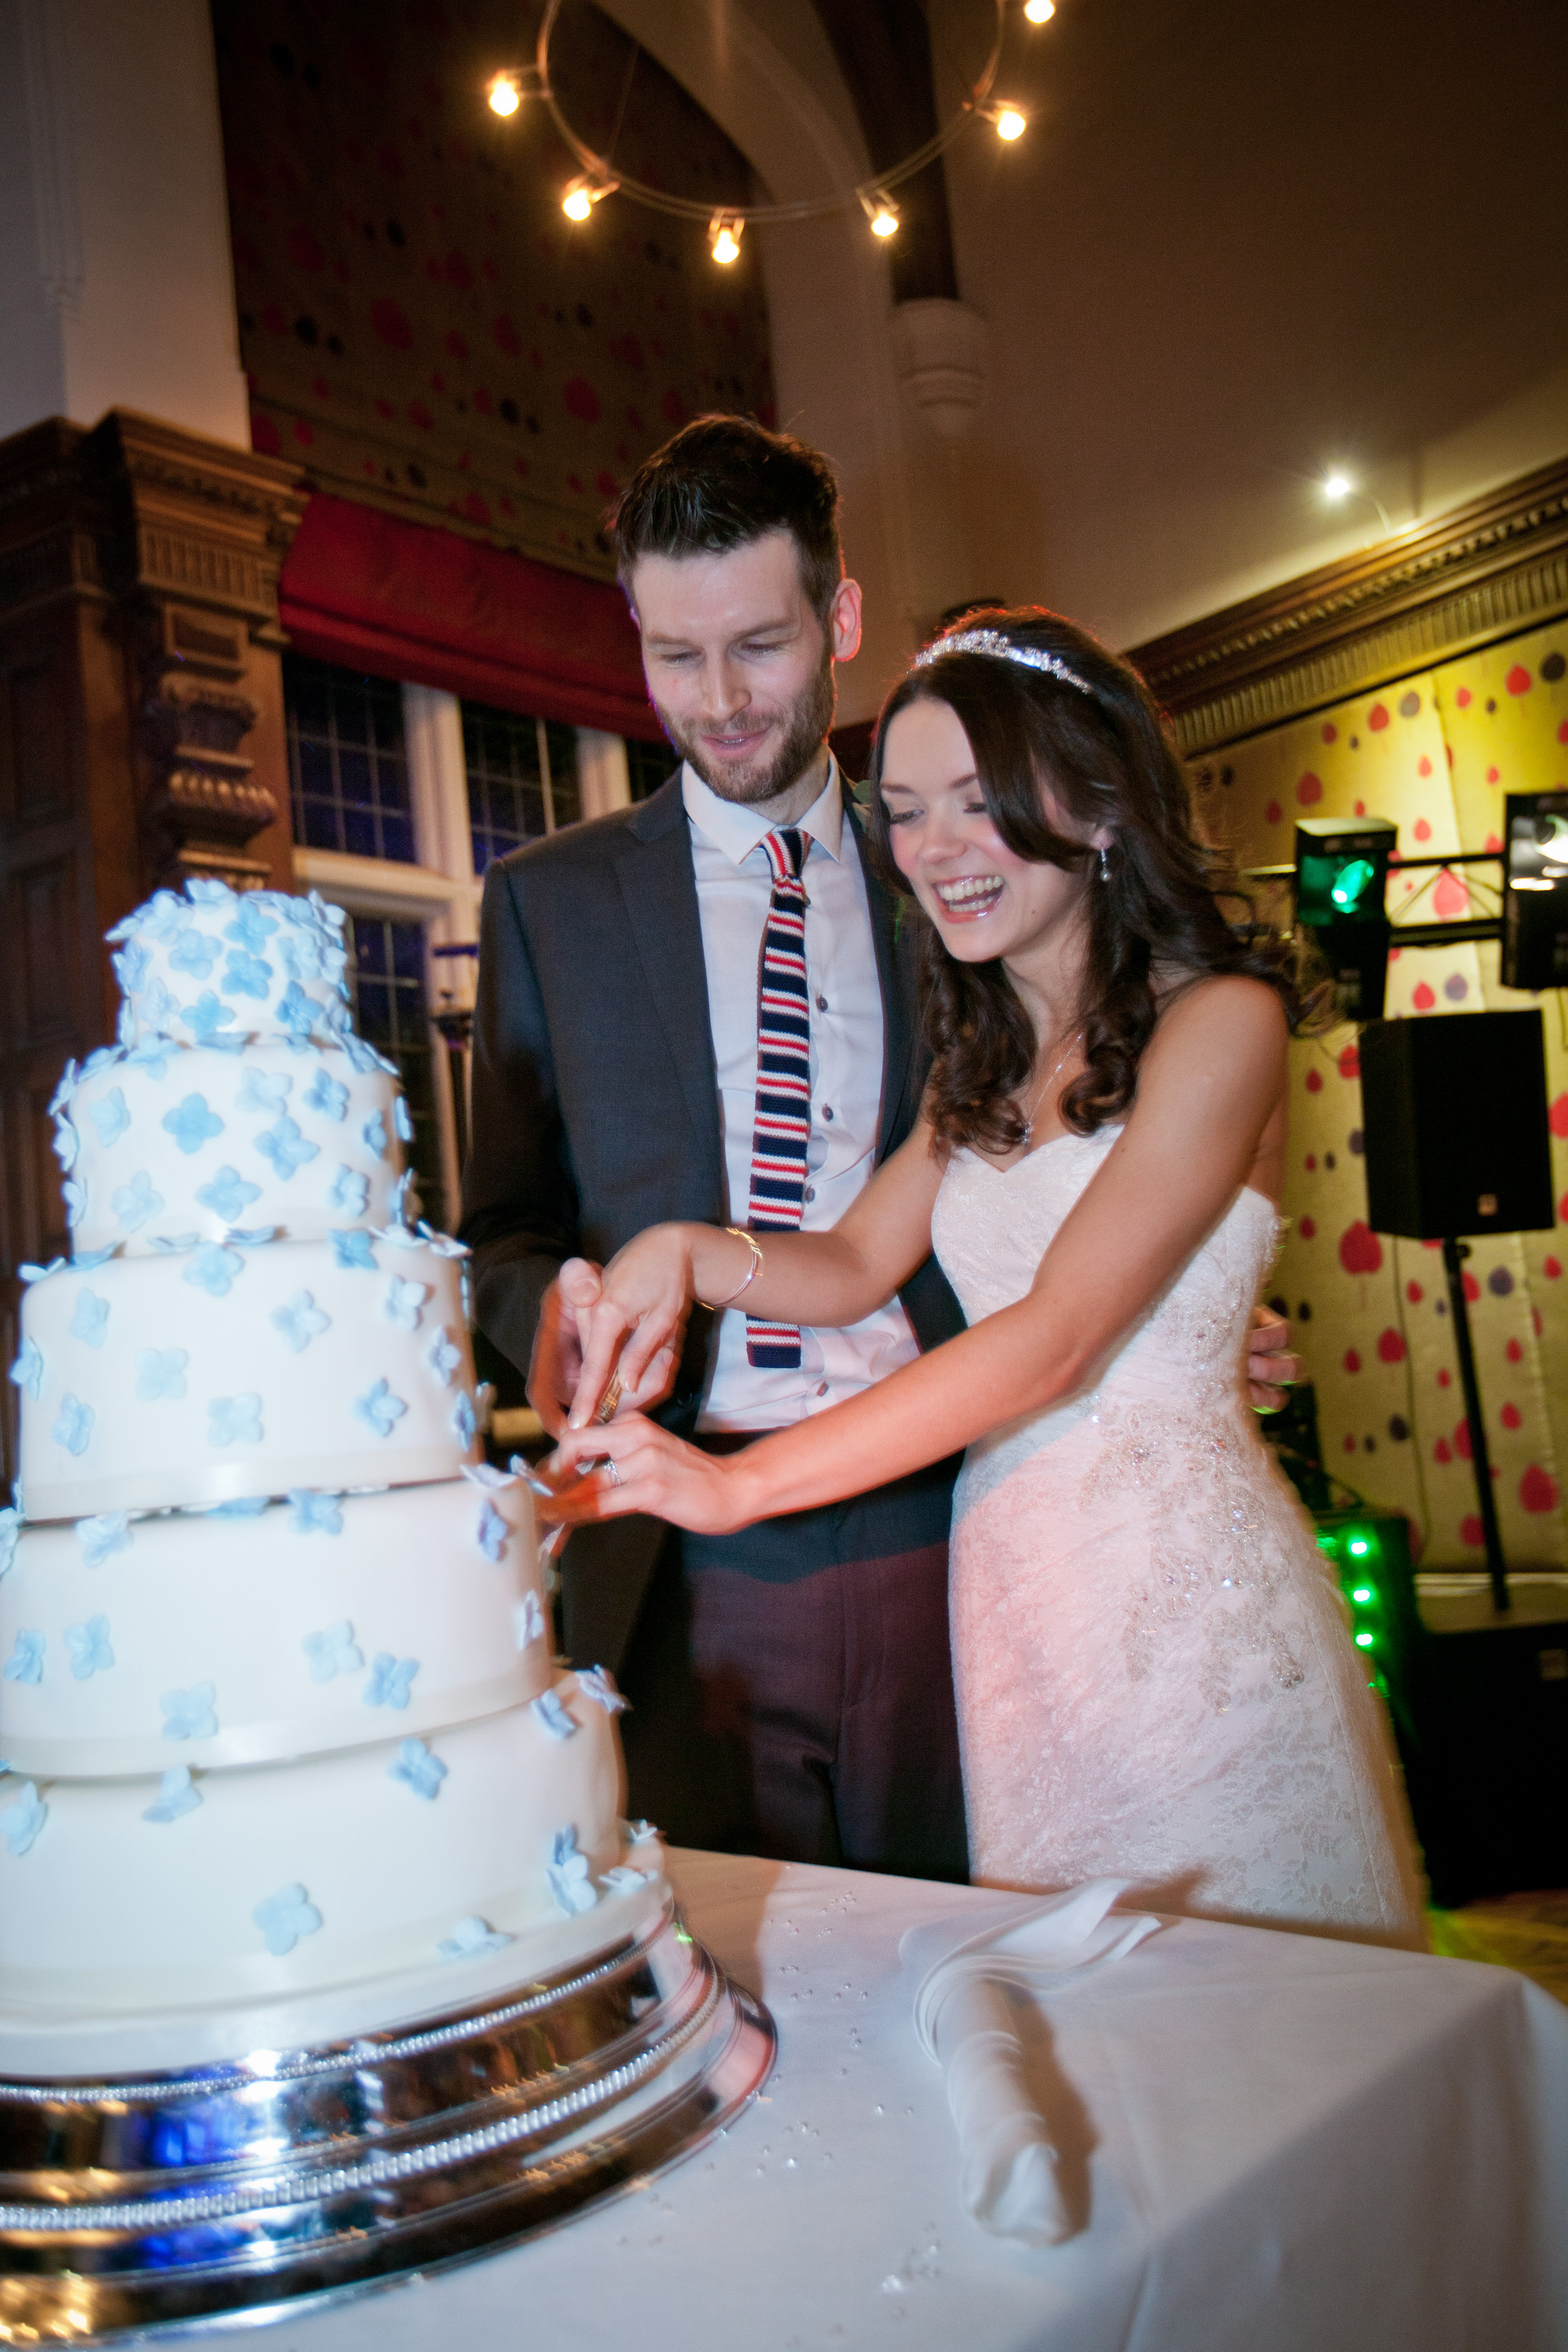 Images of large wedding cakes